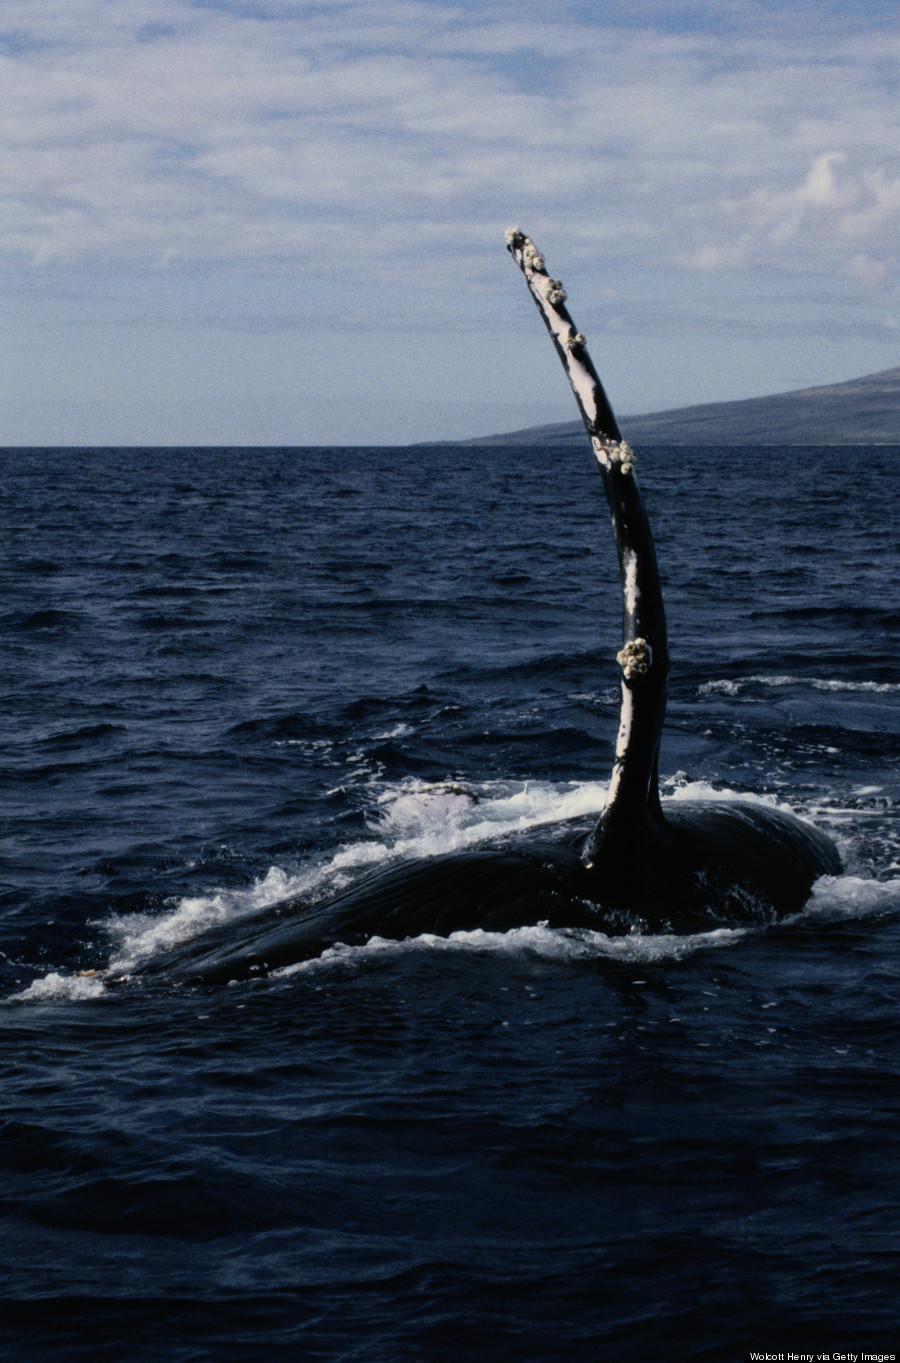 humpback whale hawaii